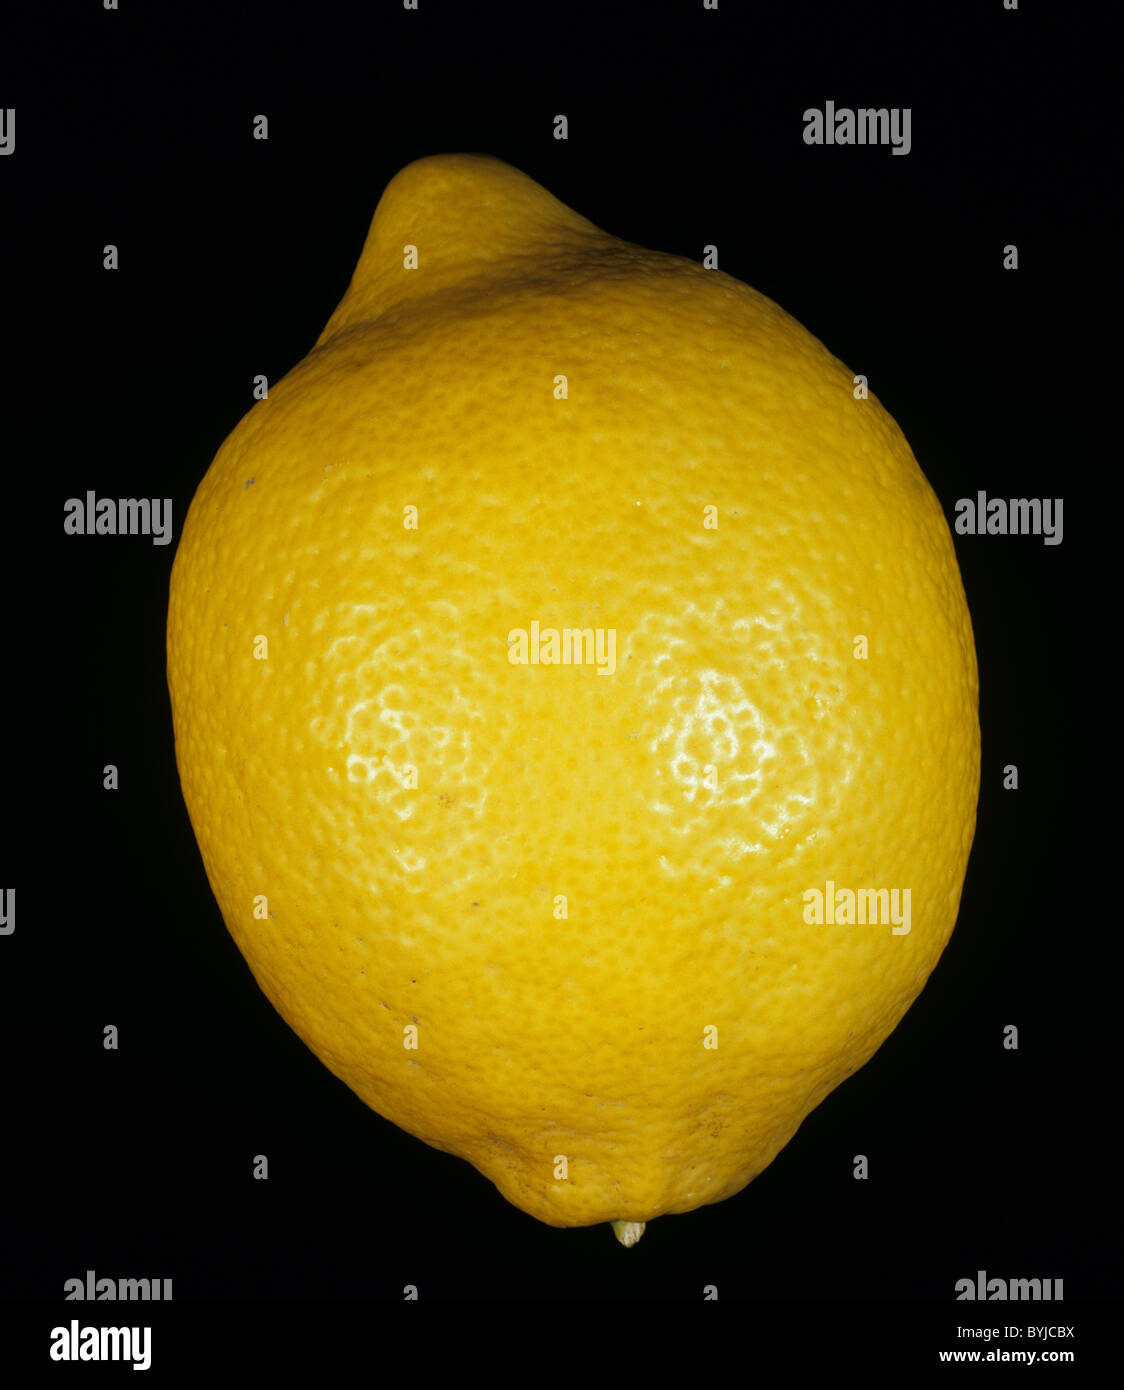 Whole citrus fruit lemon variety Femminello Stock Photo